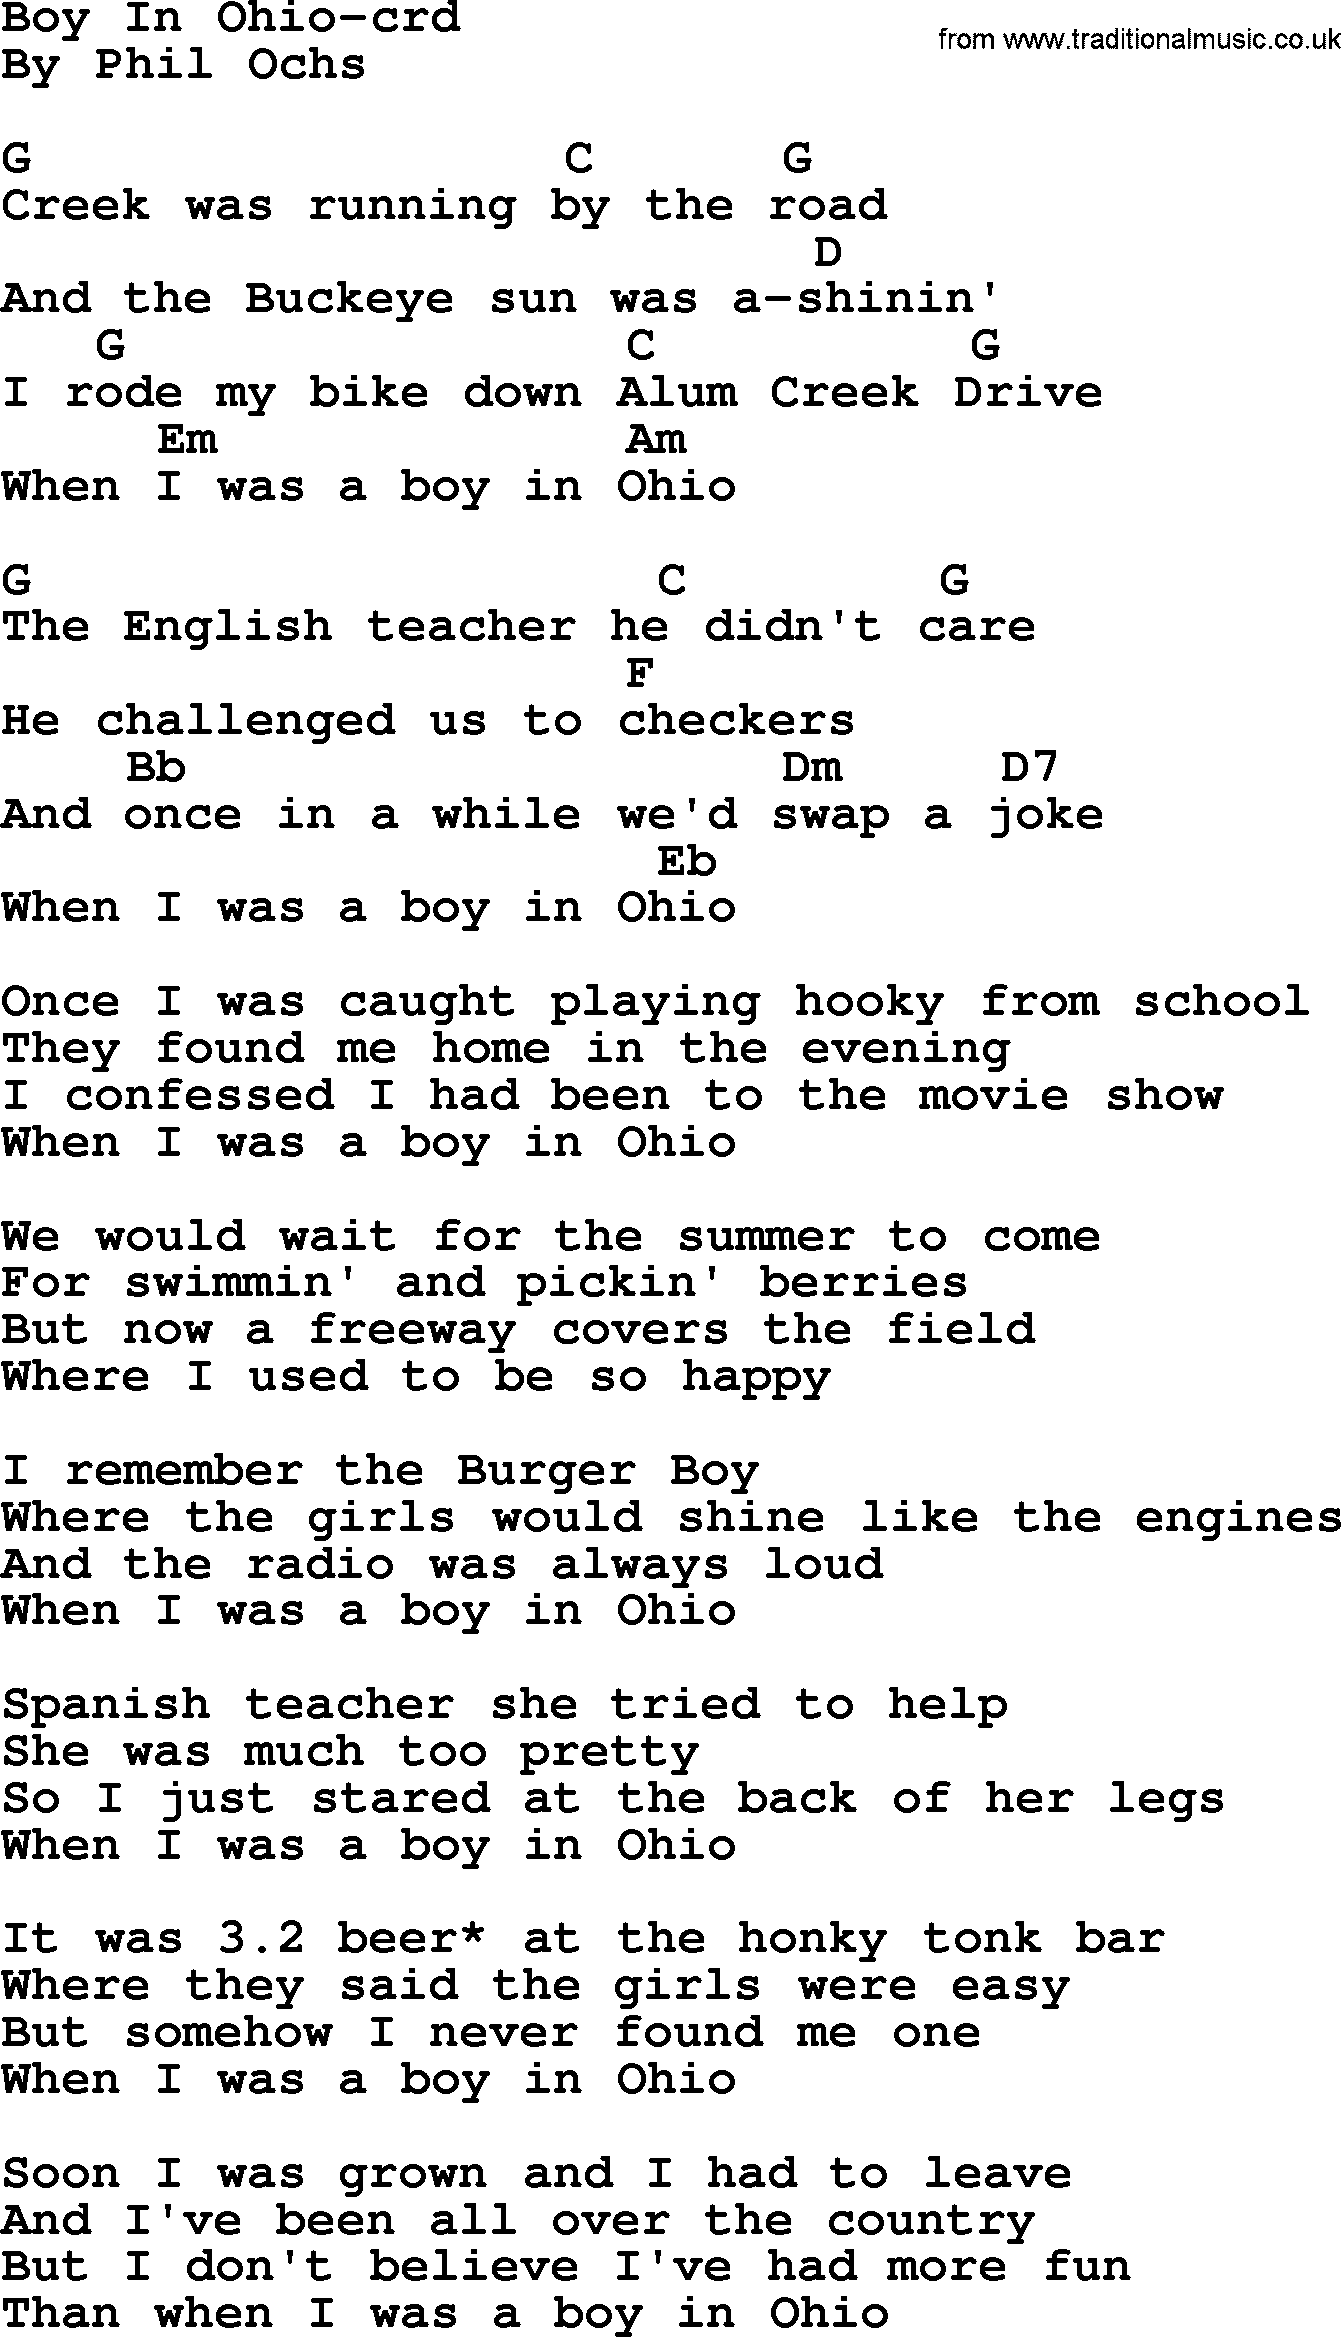 Phil Ochs song Boy In Ohio- by Phil Ochs, lyrics and chords